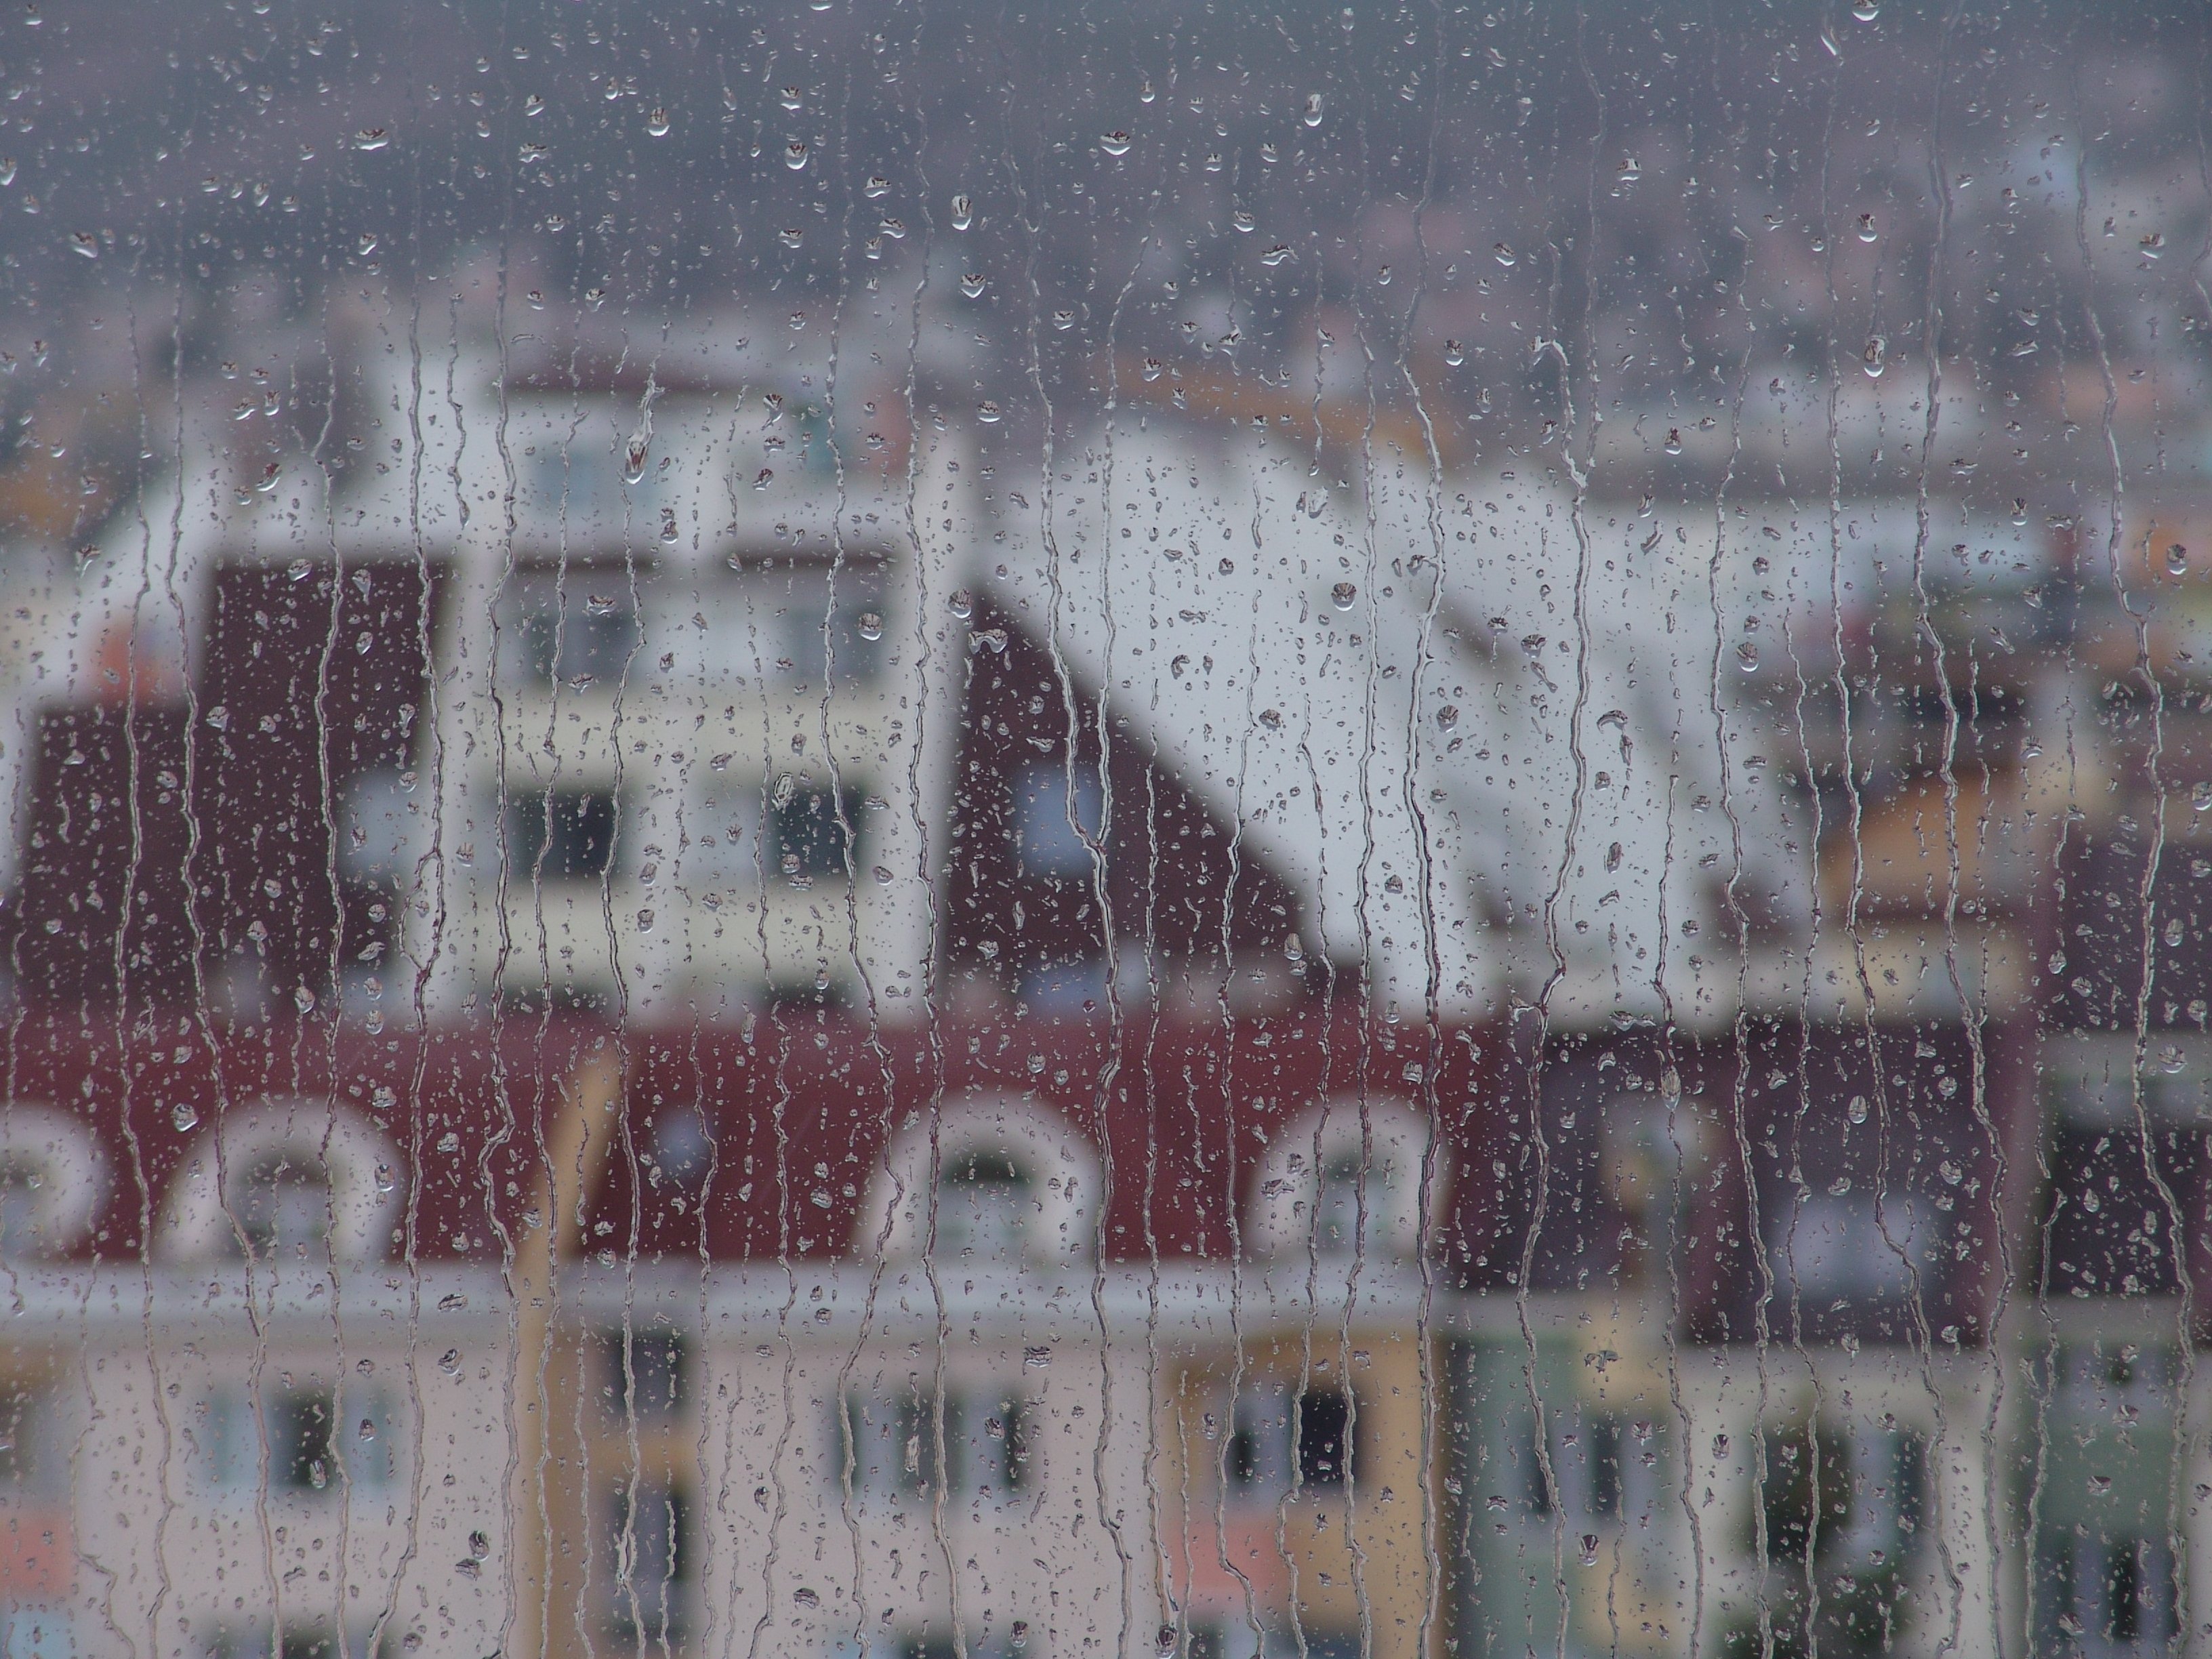 ata, Sot, Sofia, Bulgaria, Rainy, Day Wallpaper